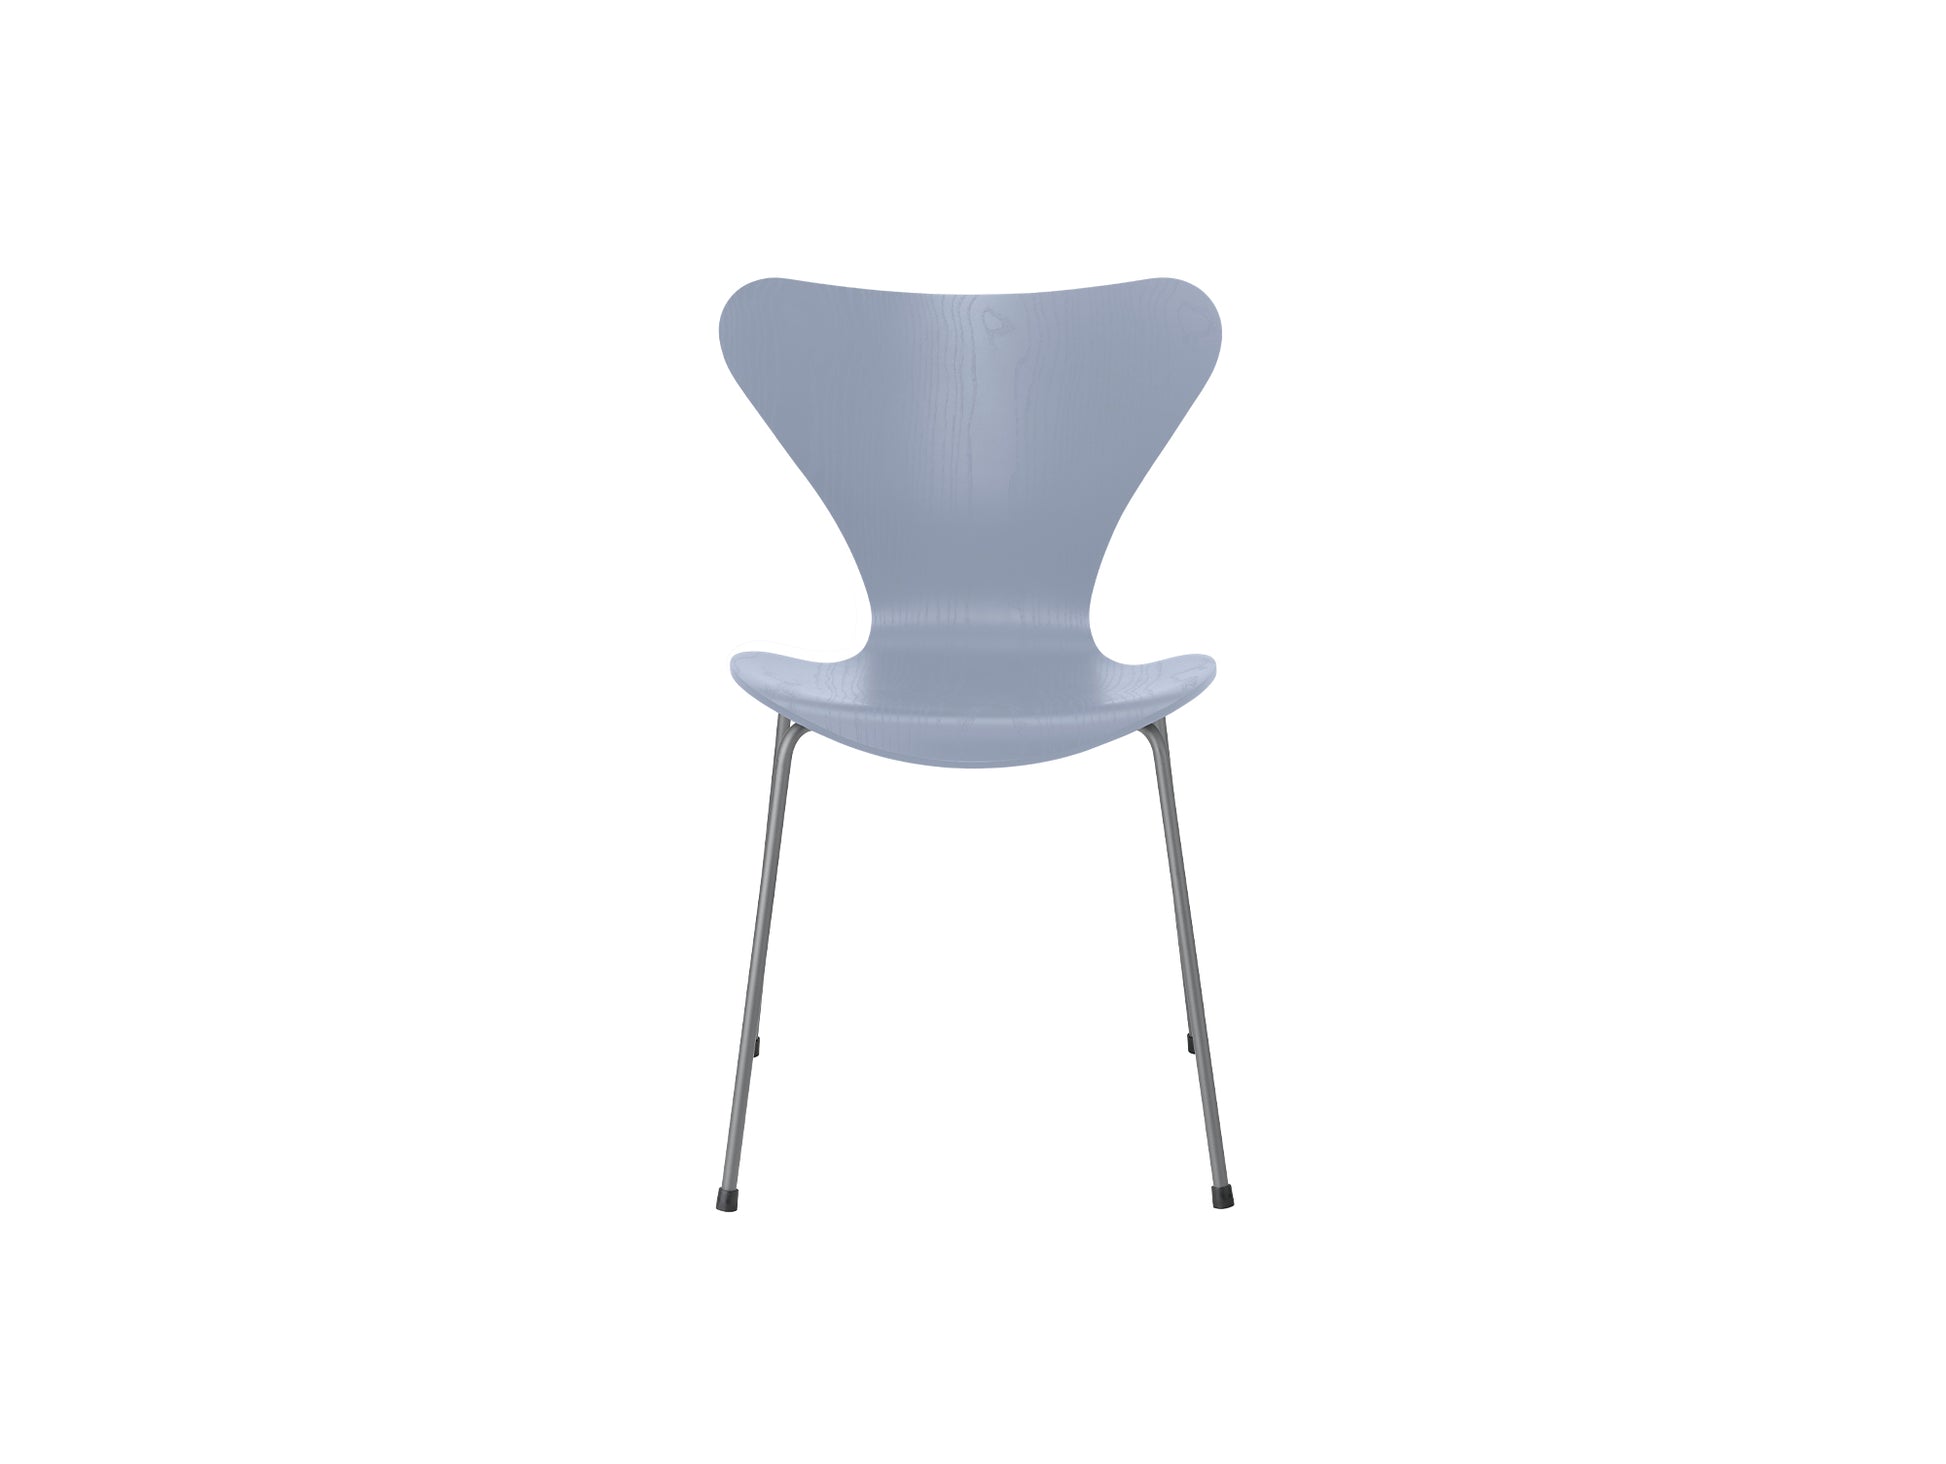 Series 7™ 3107 Dining Chair by Fritz Hansen - Lavender Blue Coloured Ash Veneer Shell / Silver Grey Steel